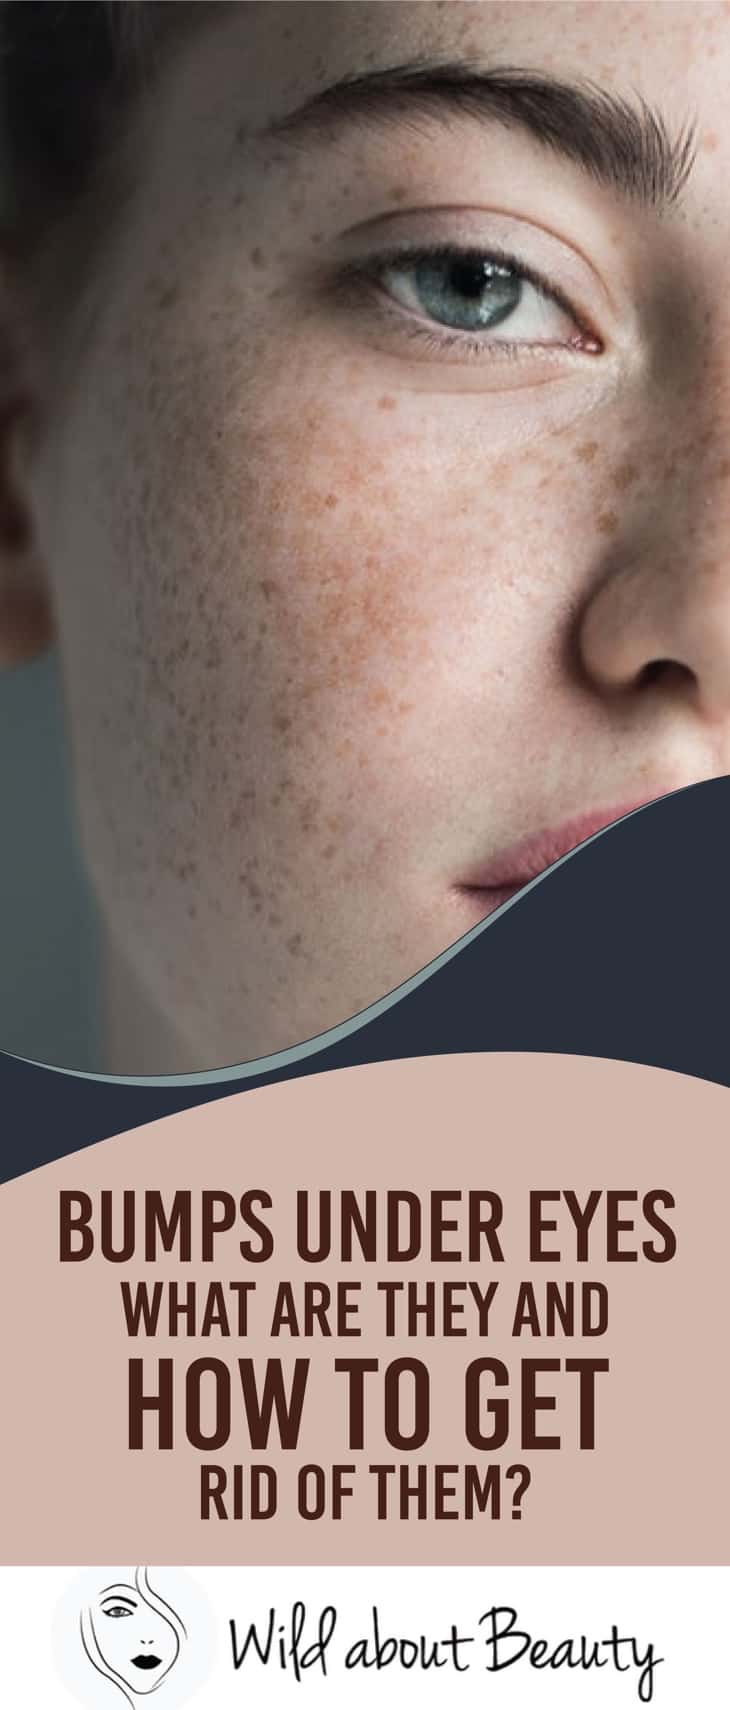 Bumps under eyes